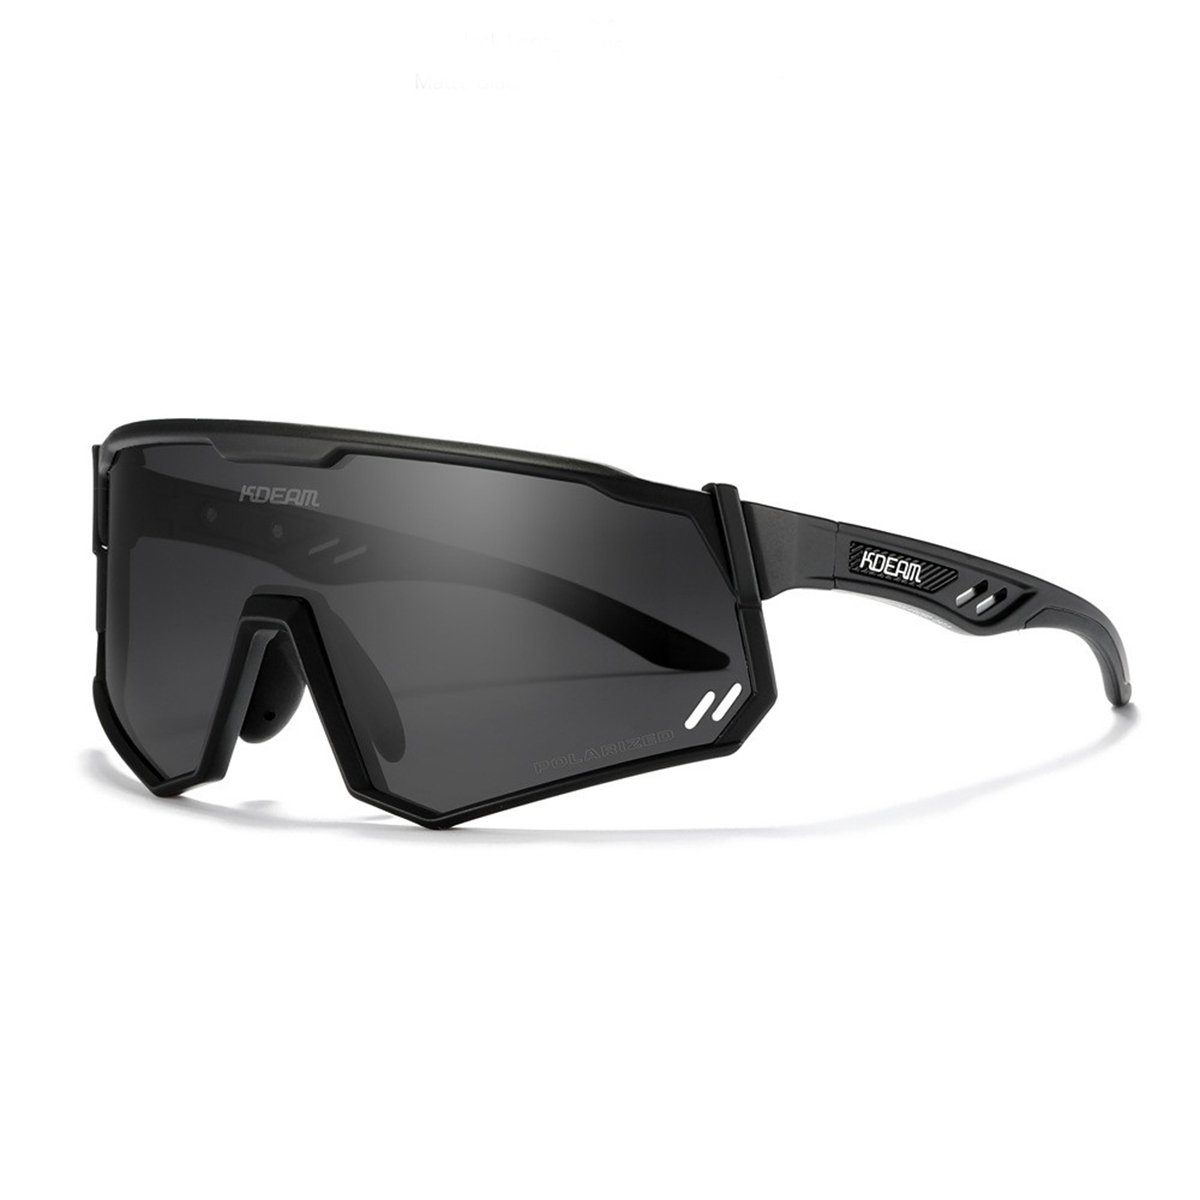 C1 Sportbrille Polarisierte Frame XDeer TR90 Radsportbrille Unbreakable Sportbrille Polarisierte, sonnenbrille Sport